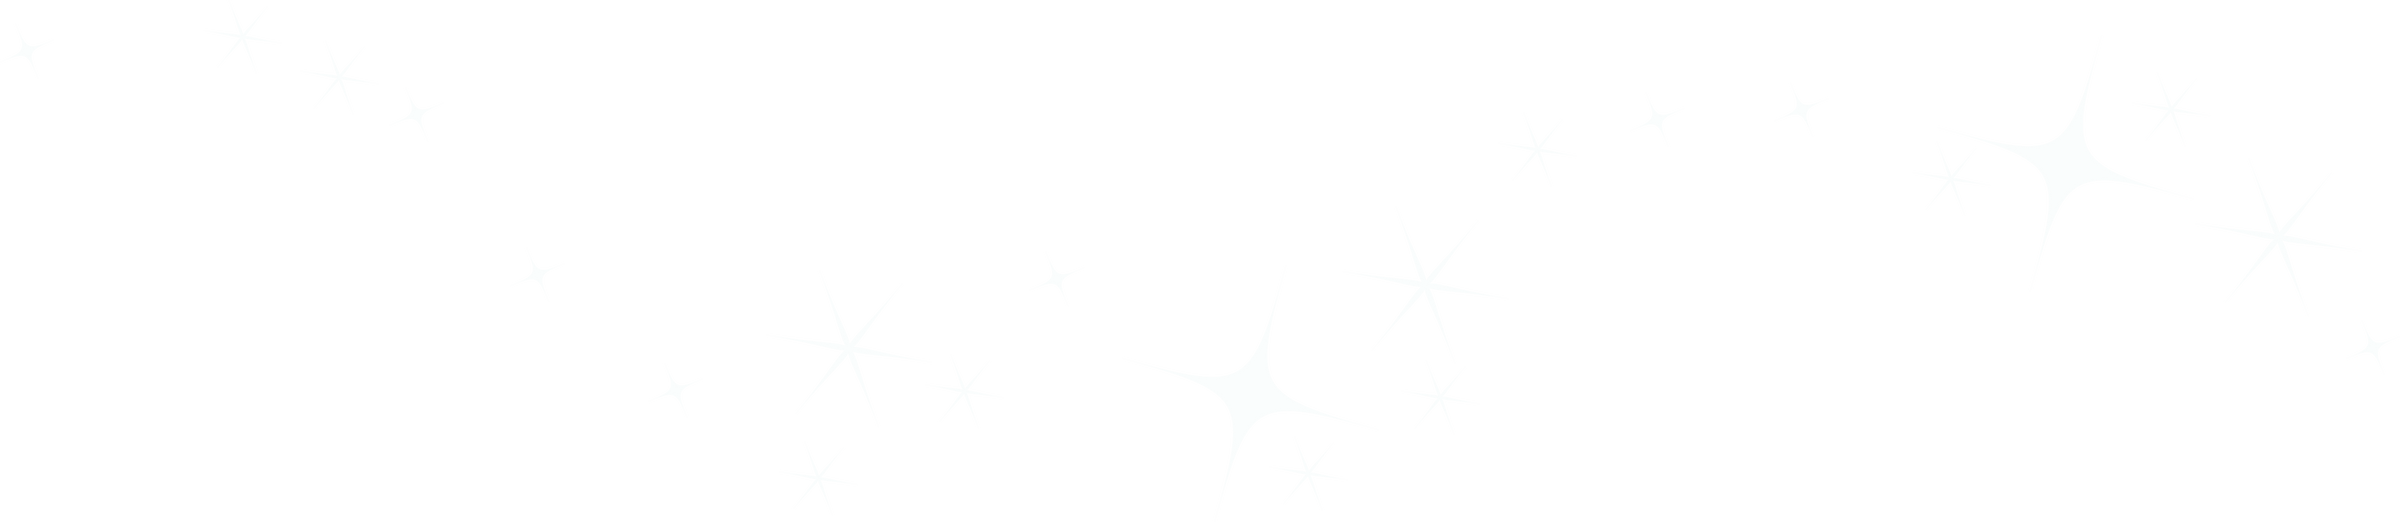 Twirling Stars Illustration